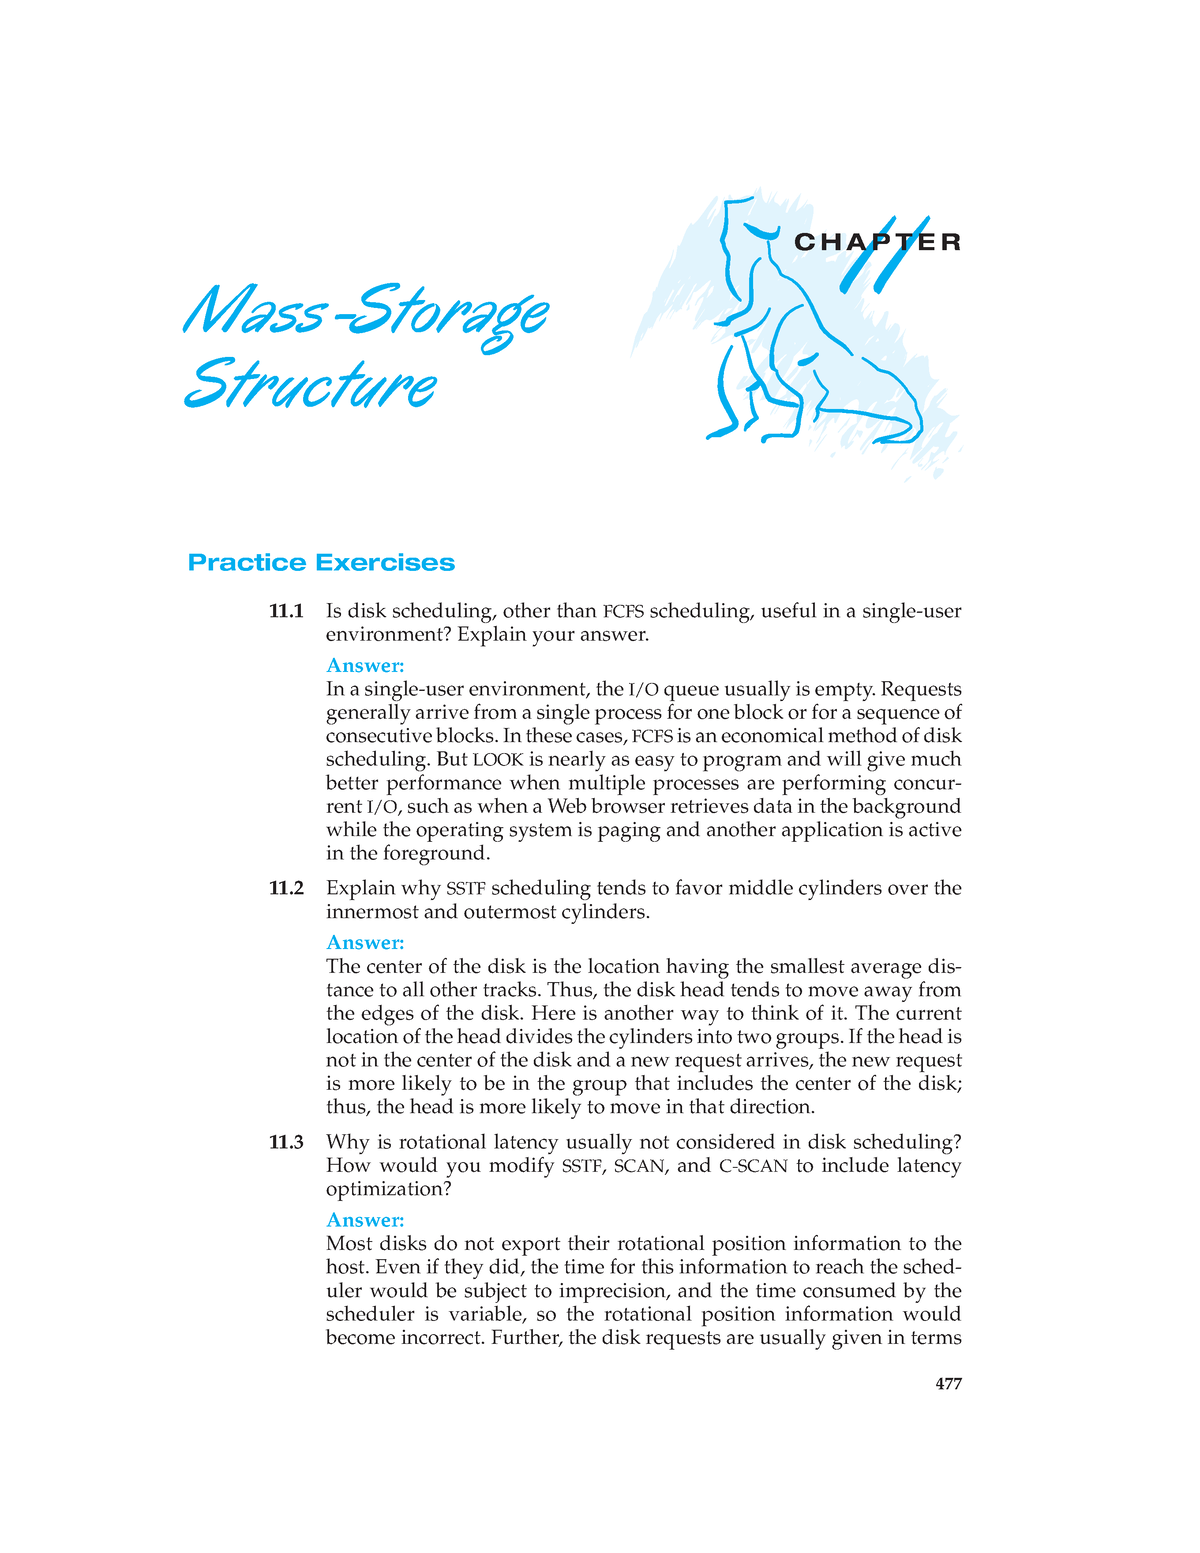 Mass Storage Structure - 11 C H A P T E R Mass -Storage Structure